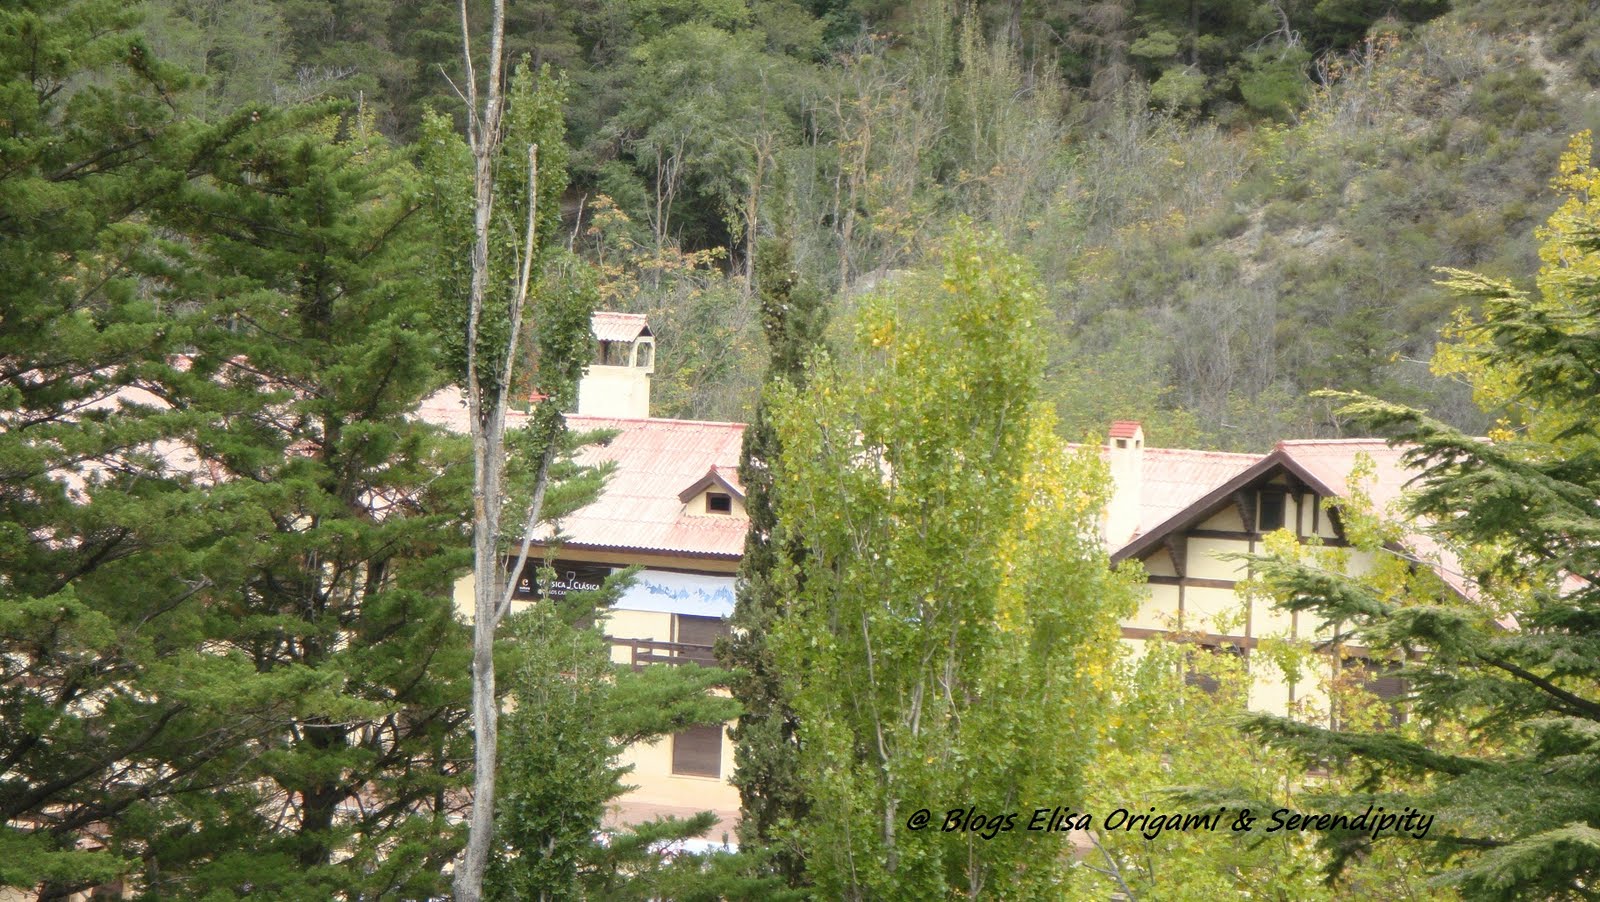 Reserva Natural de Villavicencio, Mendoza, Ruta del Vino, Argentina, Elisa N, Blog de Viajes, Lifestyle, Travel